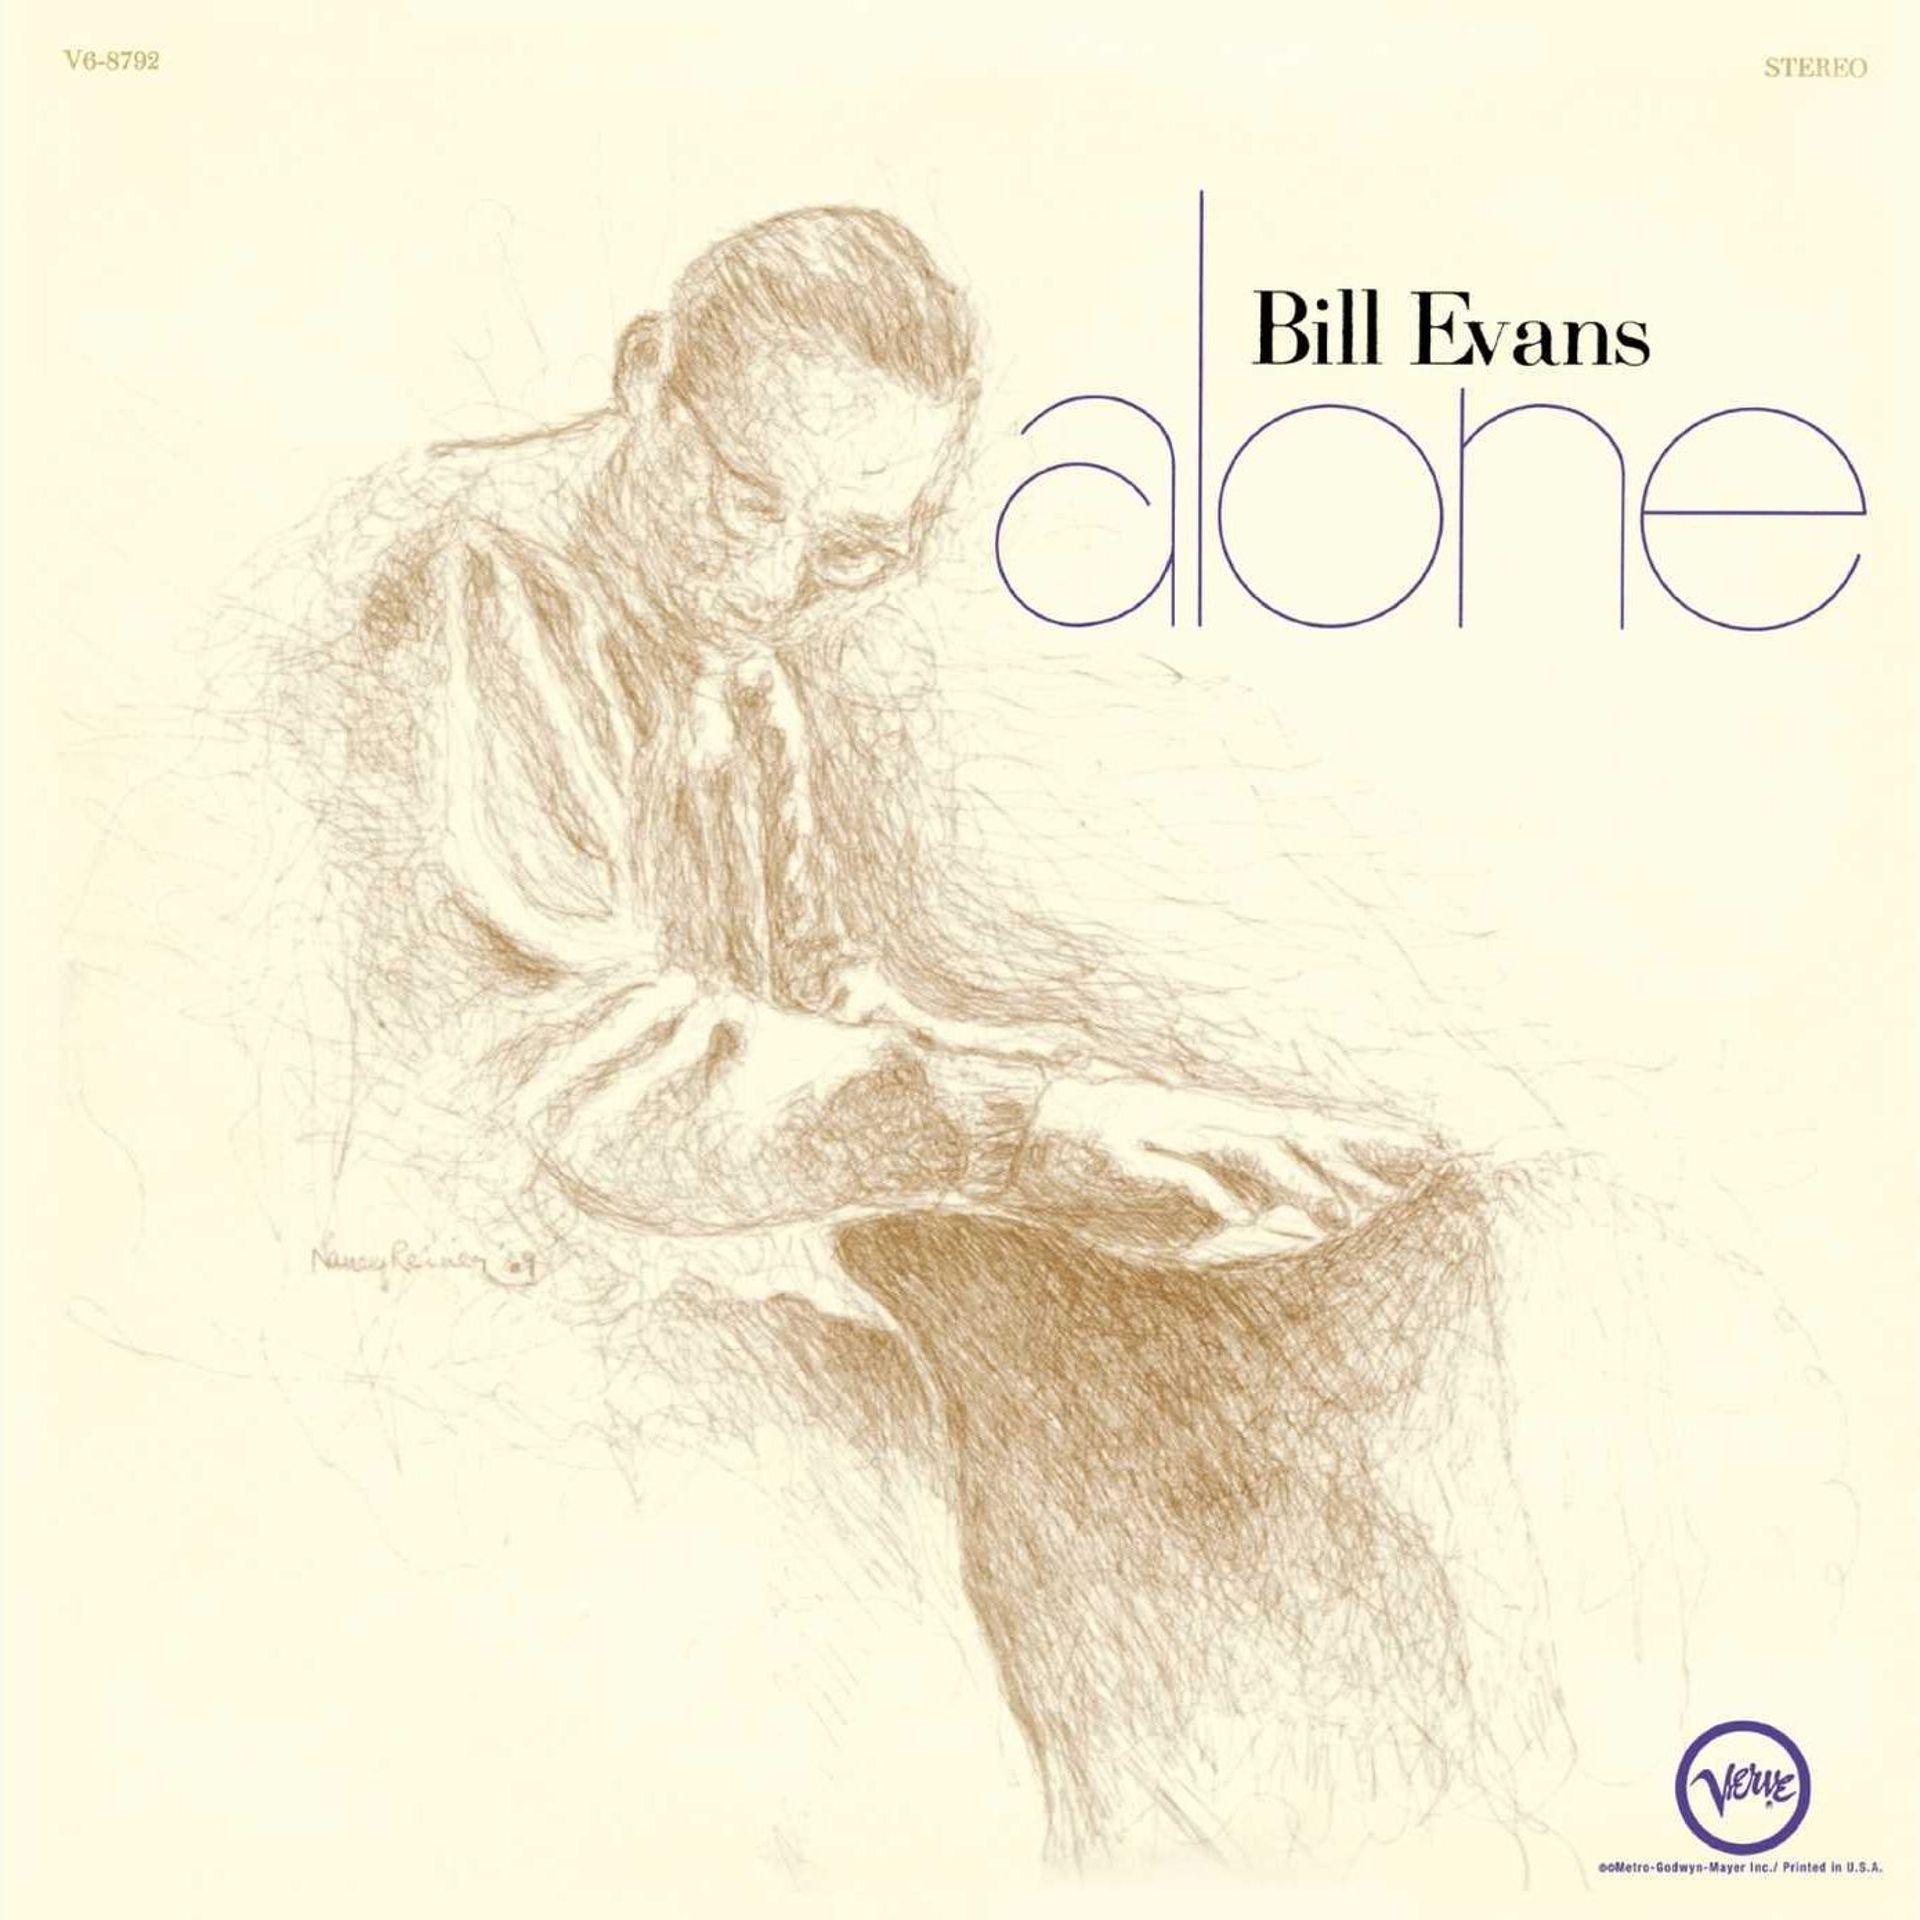 Bill Evans : "Alone" (1968)